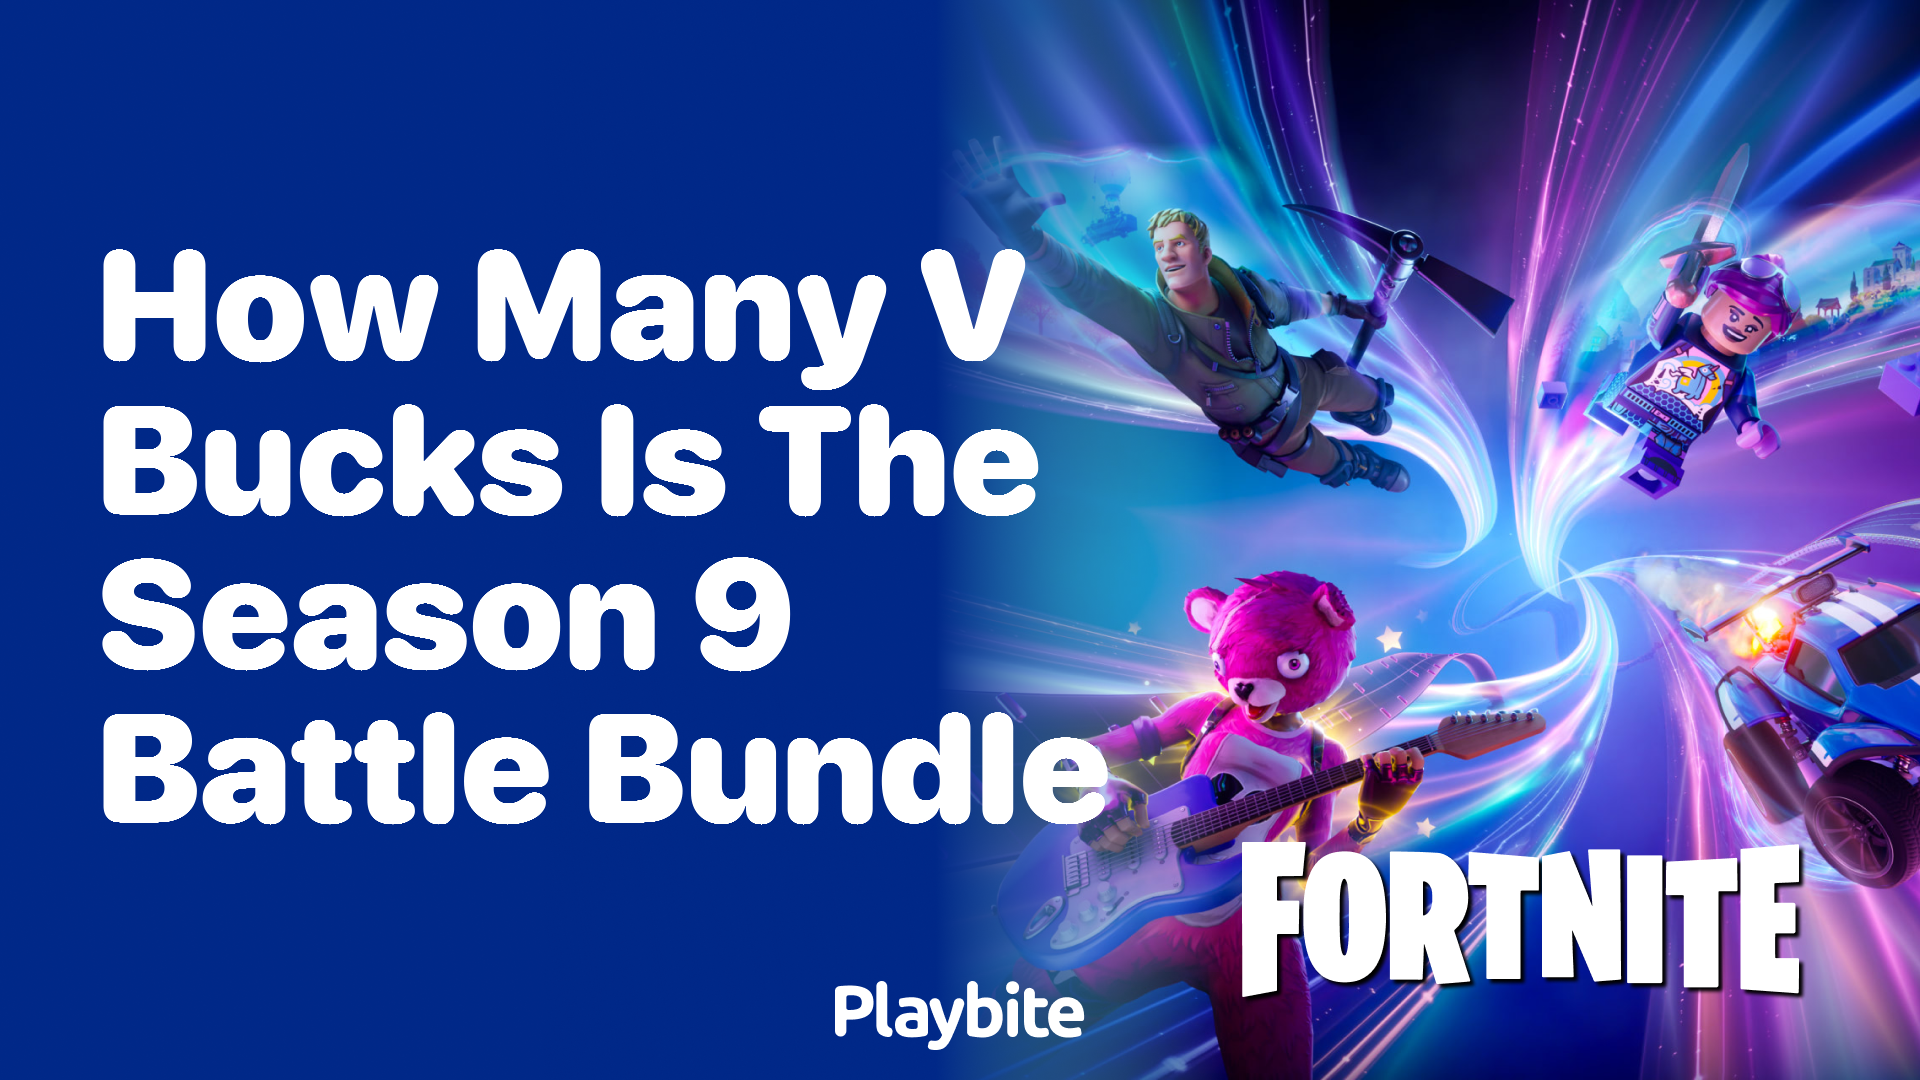 How Many V-Bucks Is the Season 9 Battle Bundle?